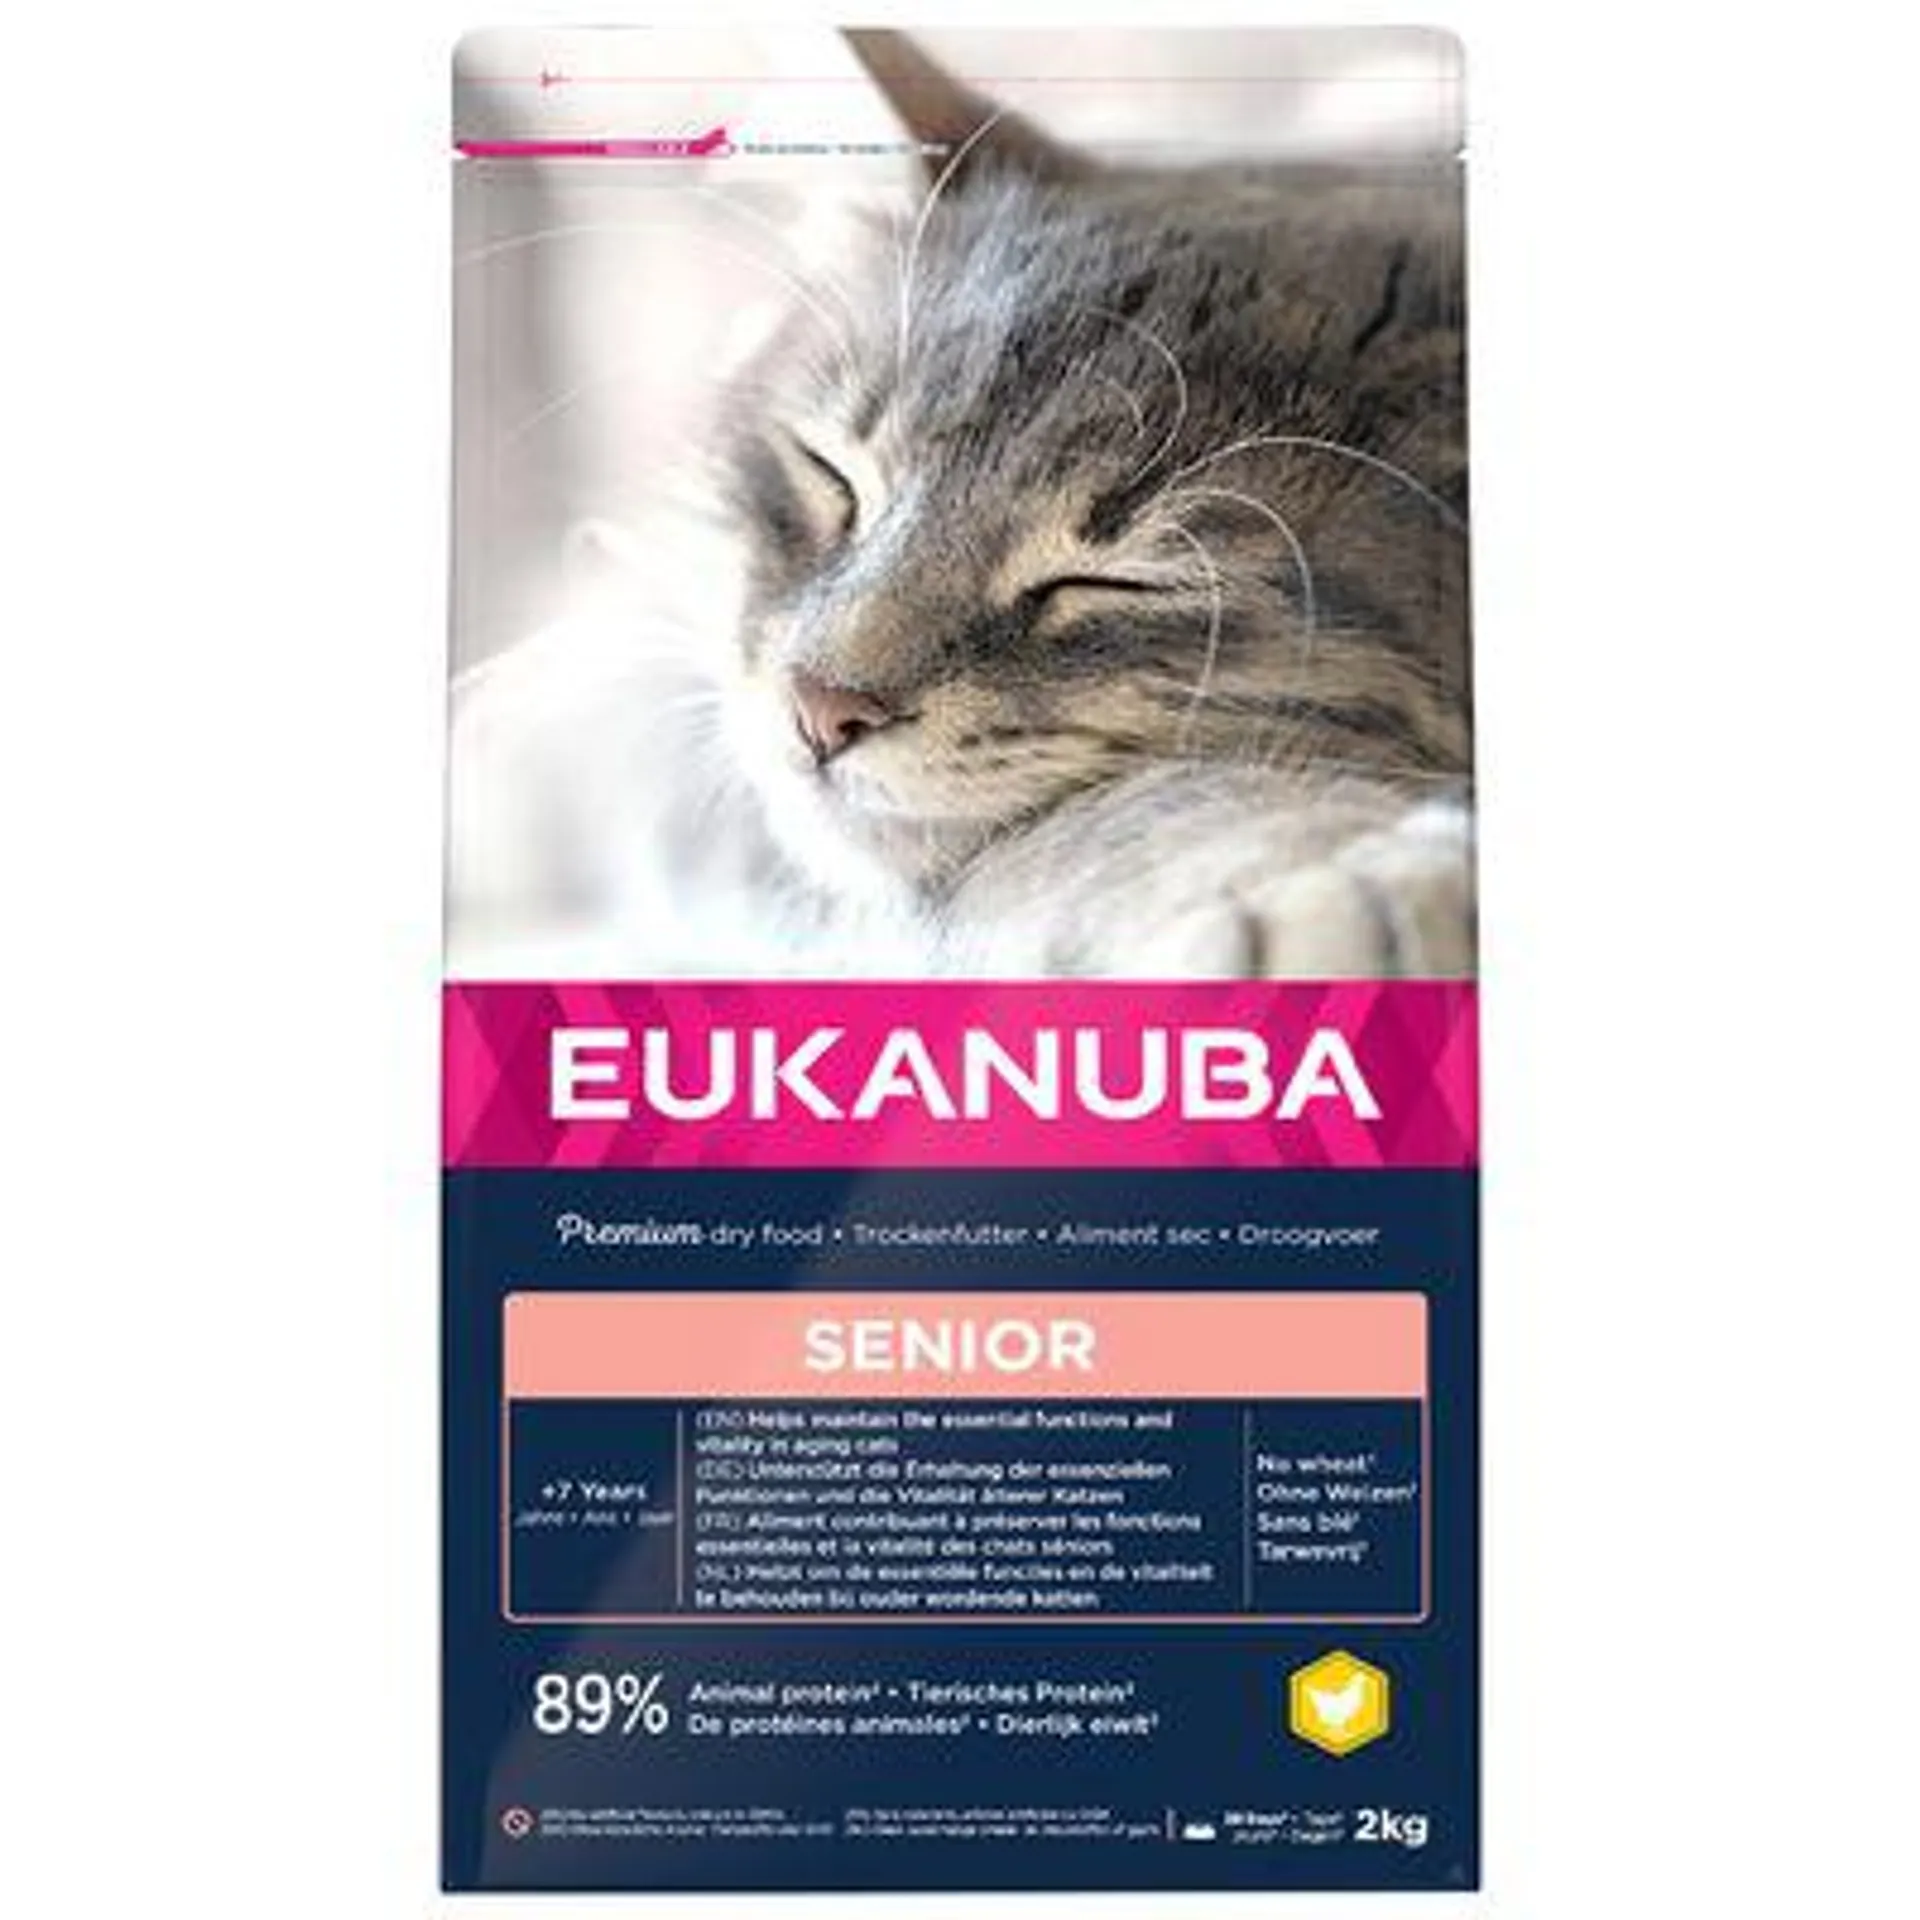 2kg Eukanuba Dry Cat Food - 15% Off! *